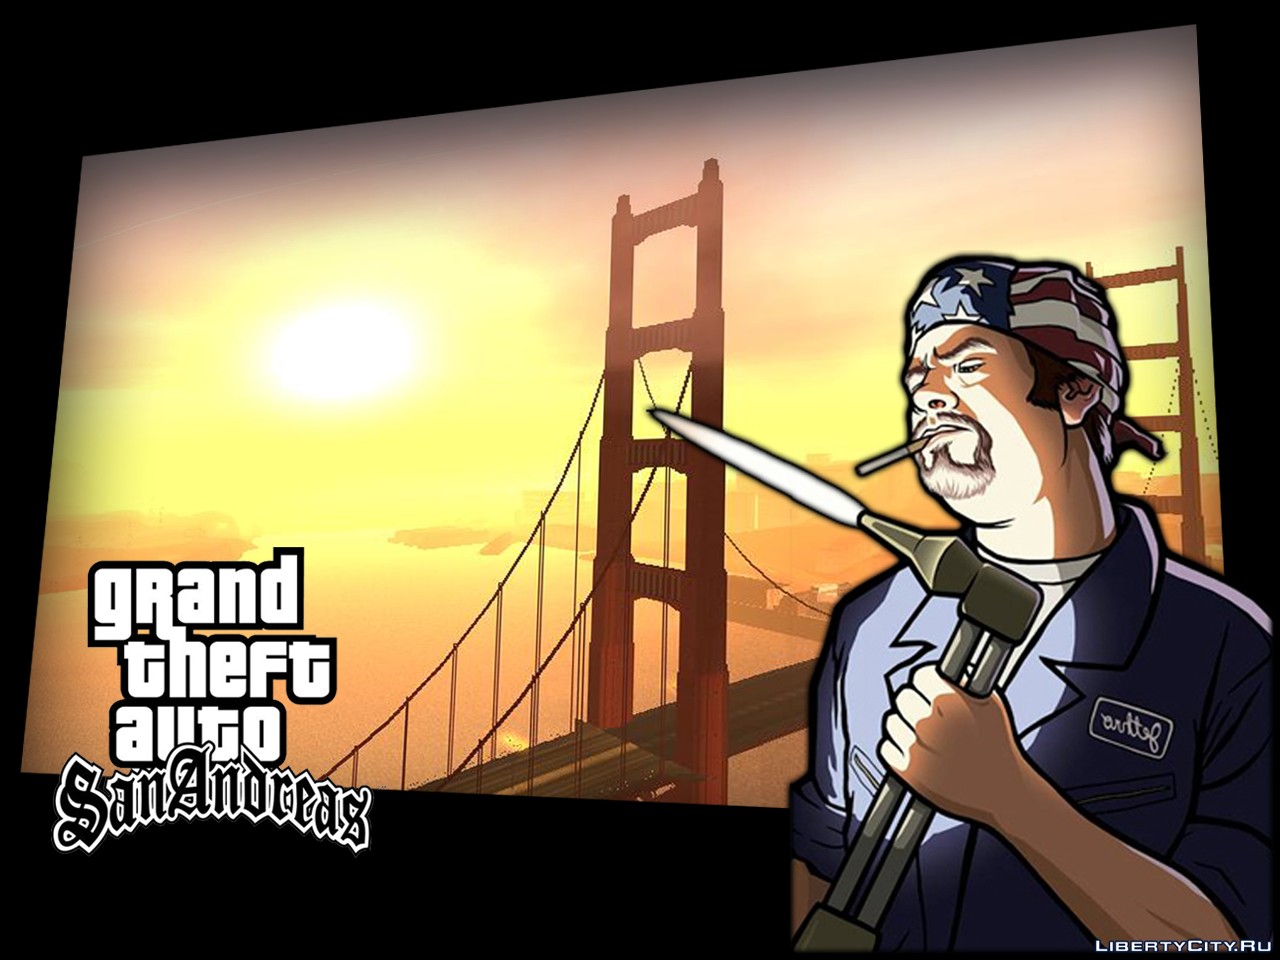 Gta loading theme. Grand Theft auto: San Andreas. ГТА Сан андреас загрузочные экраны. GTA 5 загрузочные экраны. Grand Theft auto San Andreas ГТА 5.